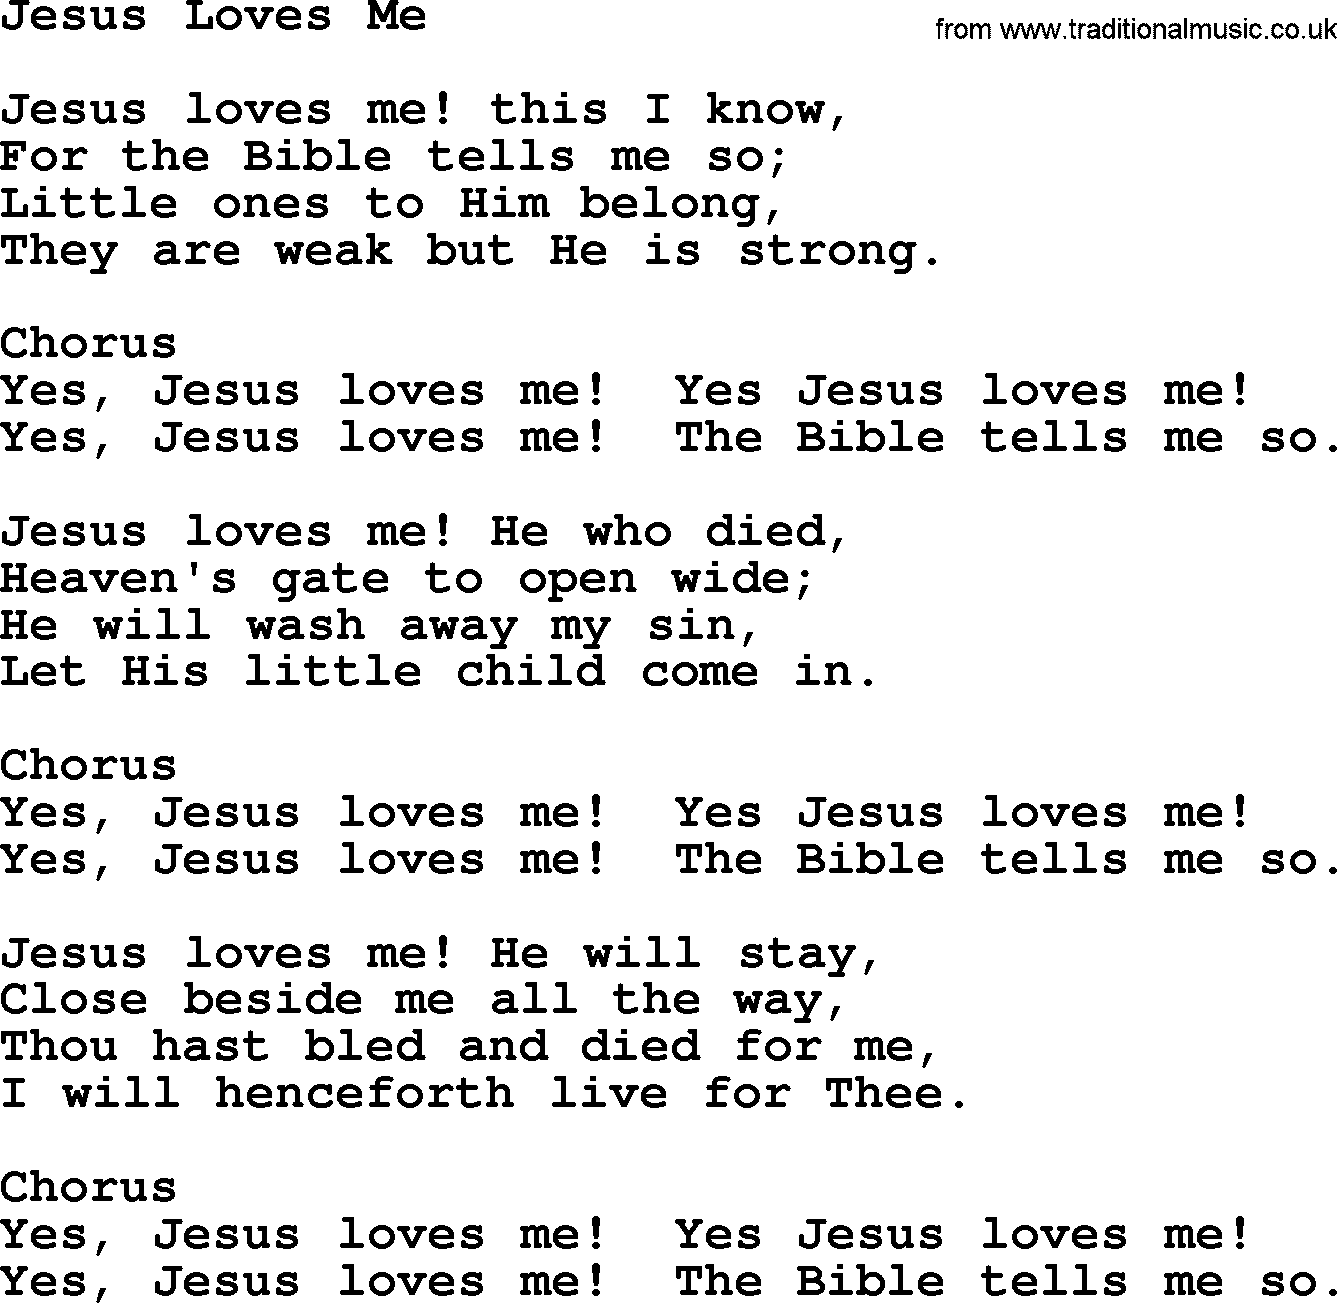 baptist-hymnal-christian-song-jesus-loves-me-lyrics-with-pdf-for